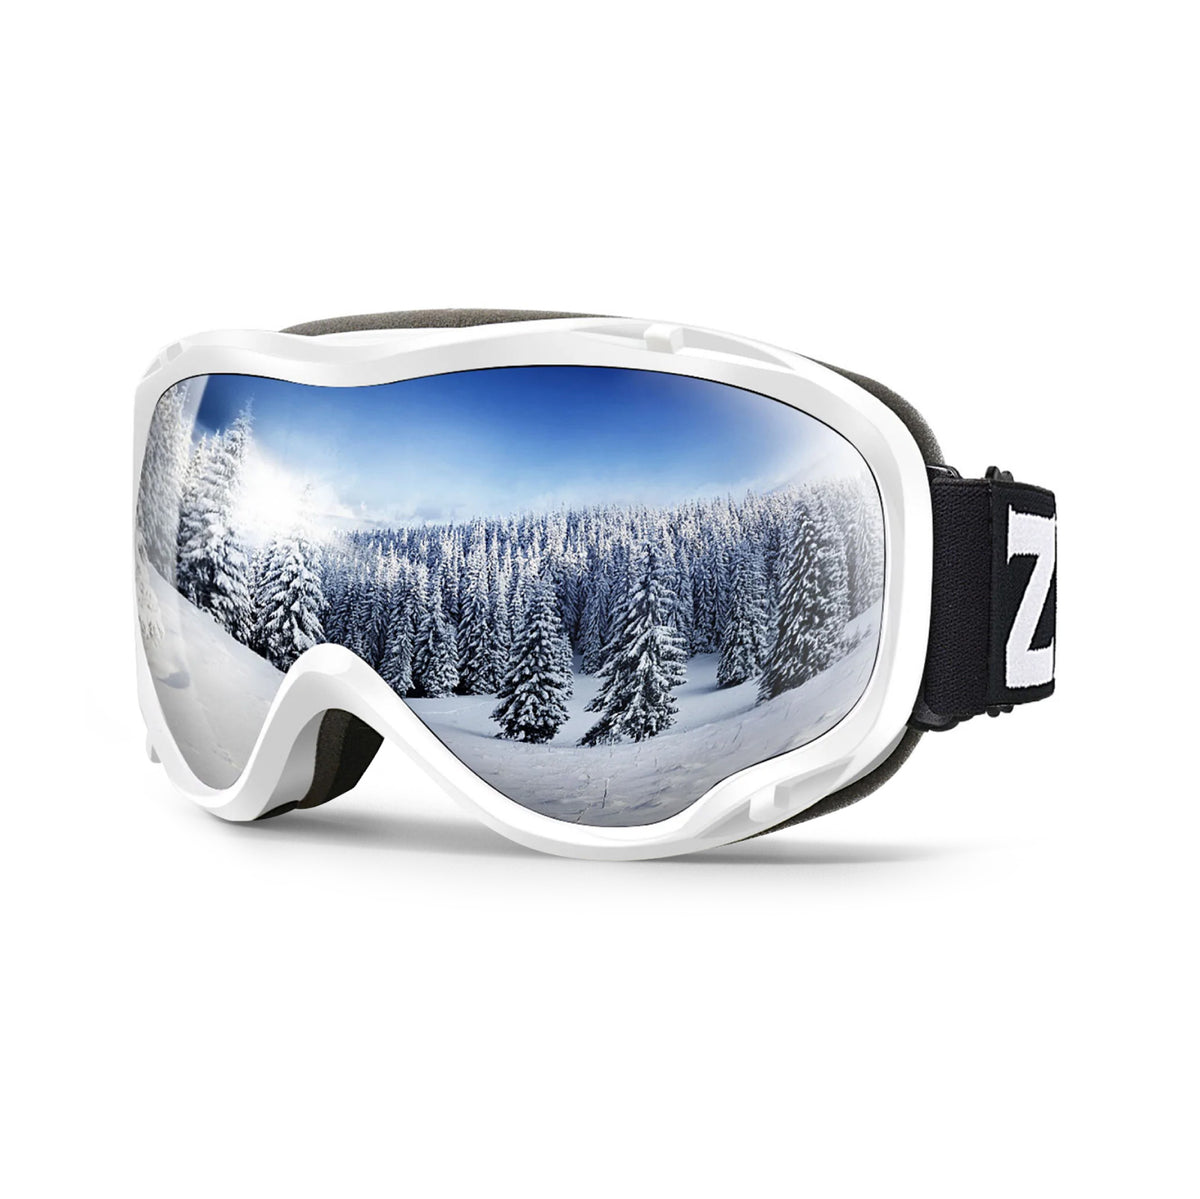 GetUSCart- ZIONOR Lagopus Ski Snowboard Goggles UV Protection Anti